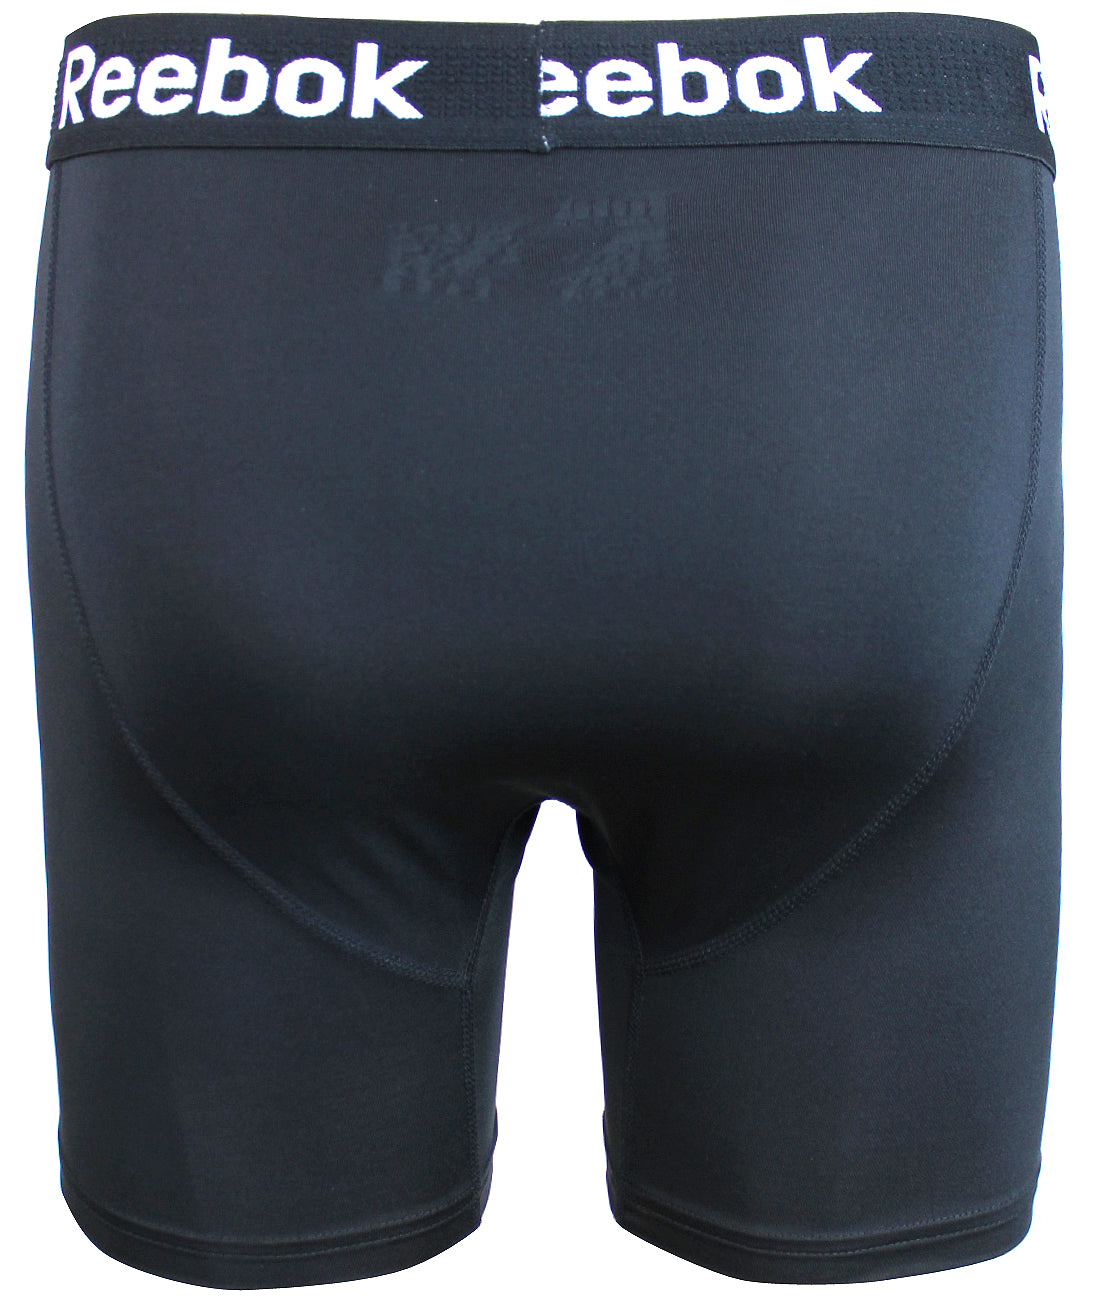 Reebok Mens Performance Training Boxer Briefs Black